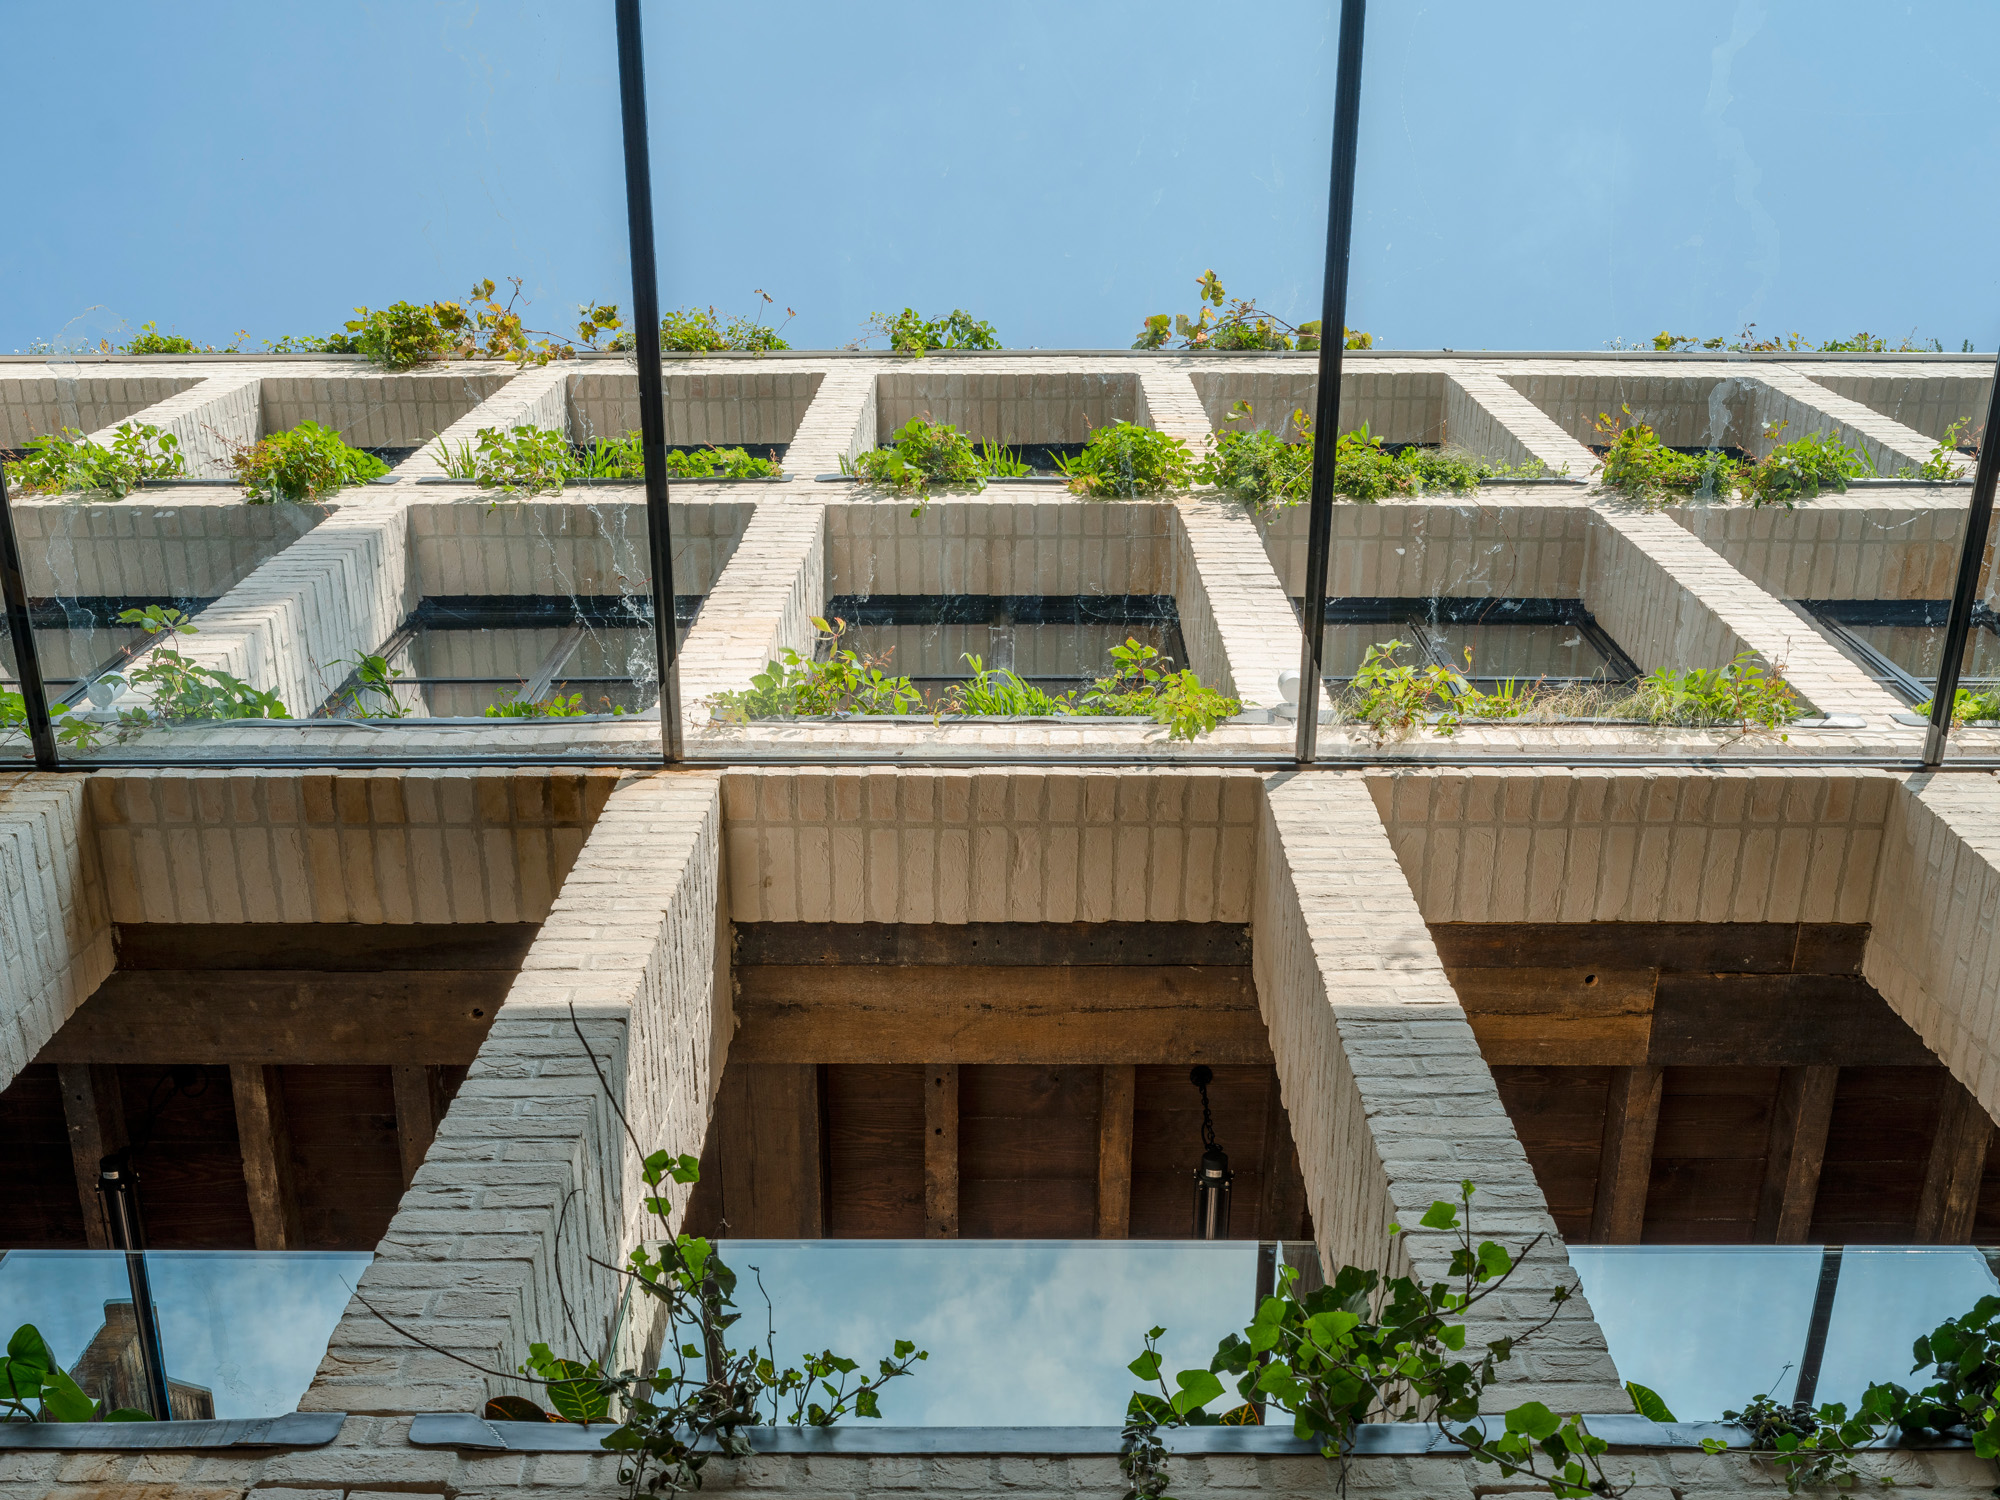 Green wall by Morrow + Lorraine - contemporary architecture design studio in London